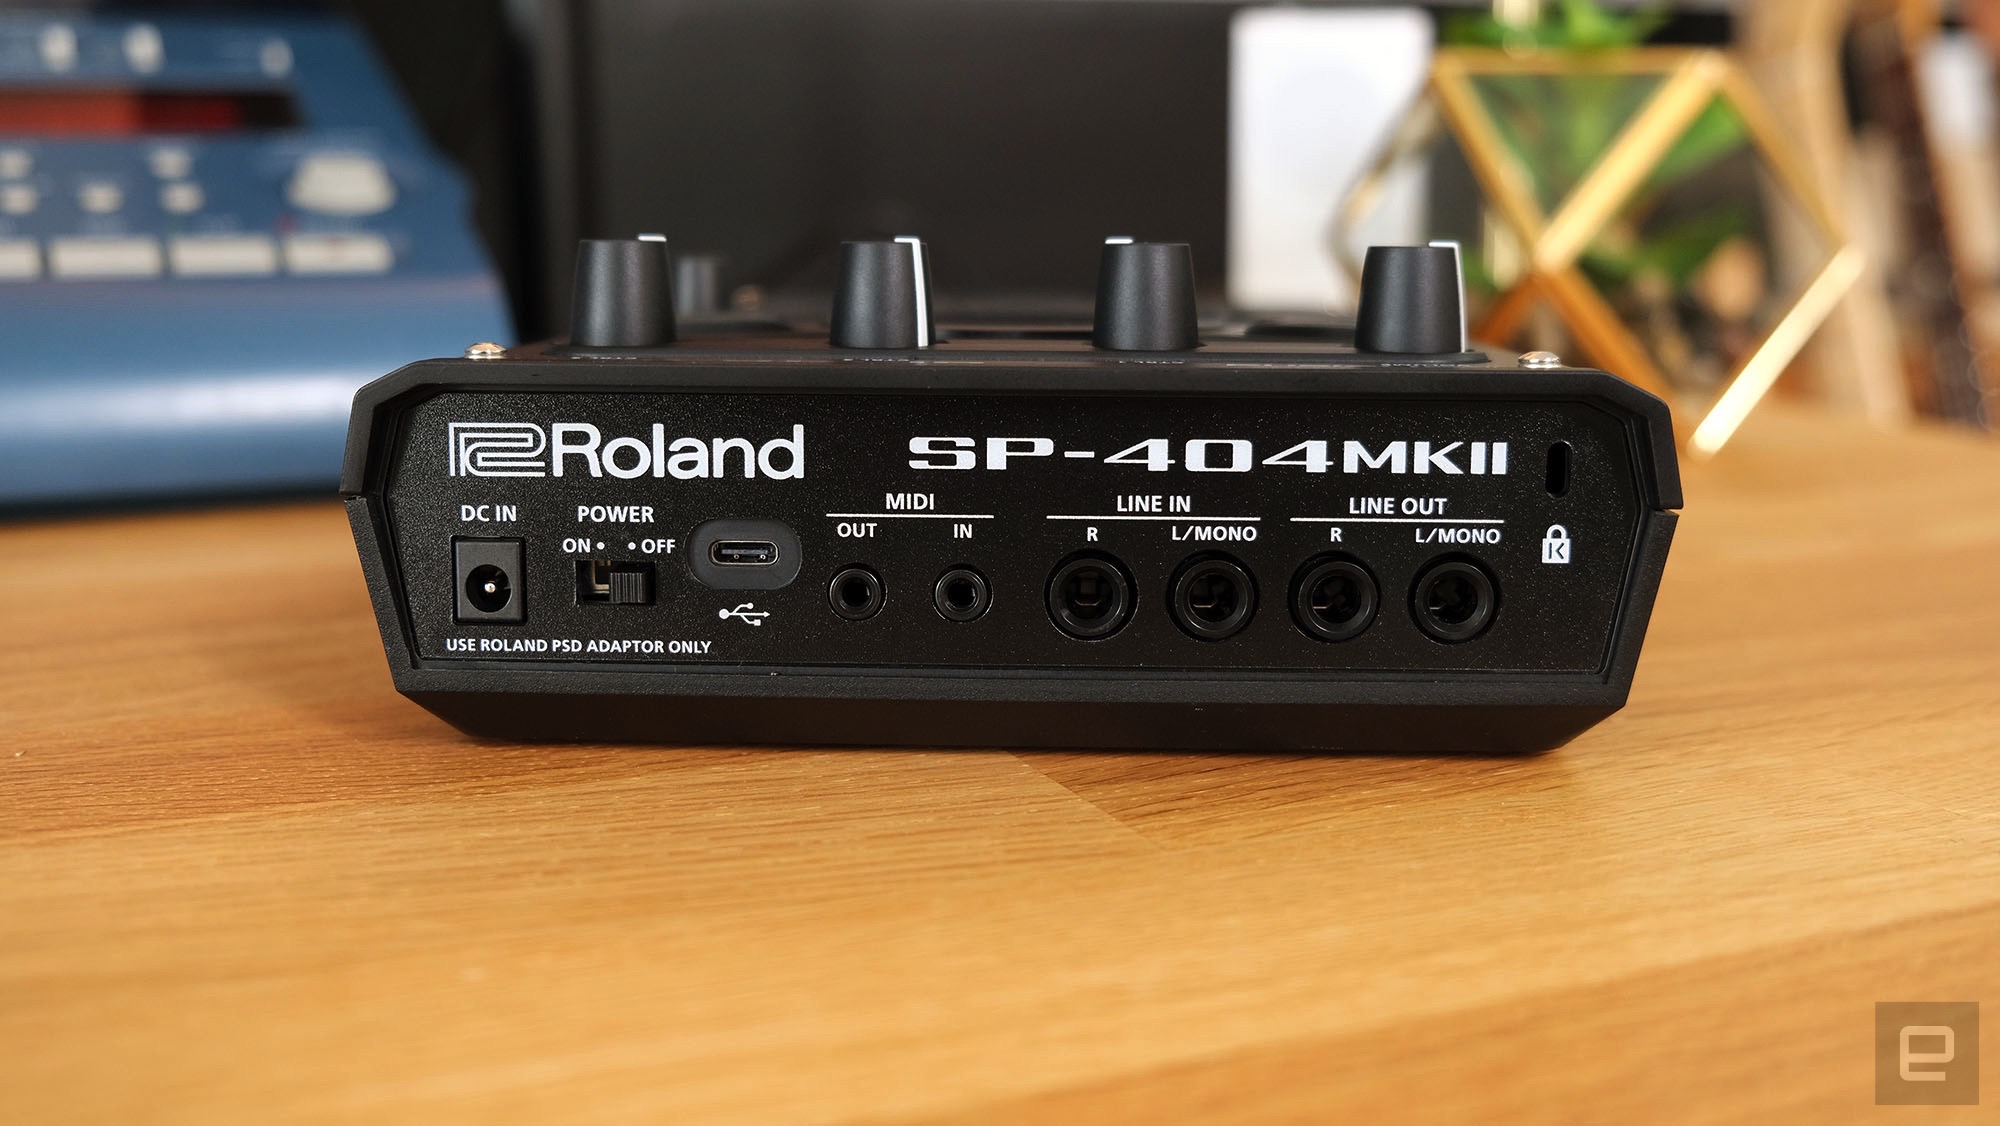 Roland SP-404MKII sampler hands-on | Engadget